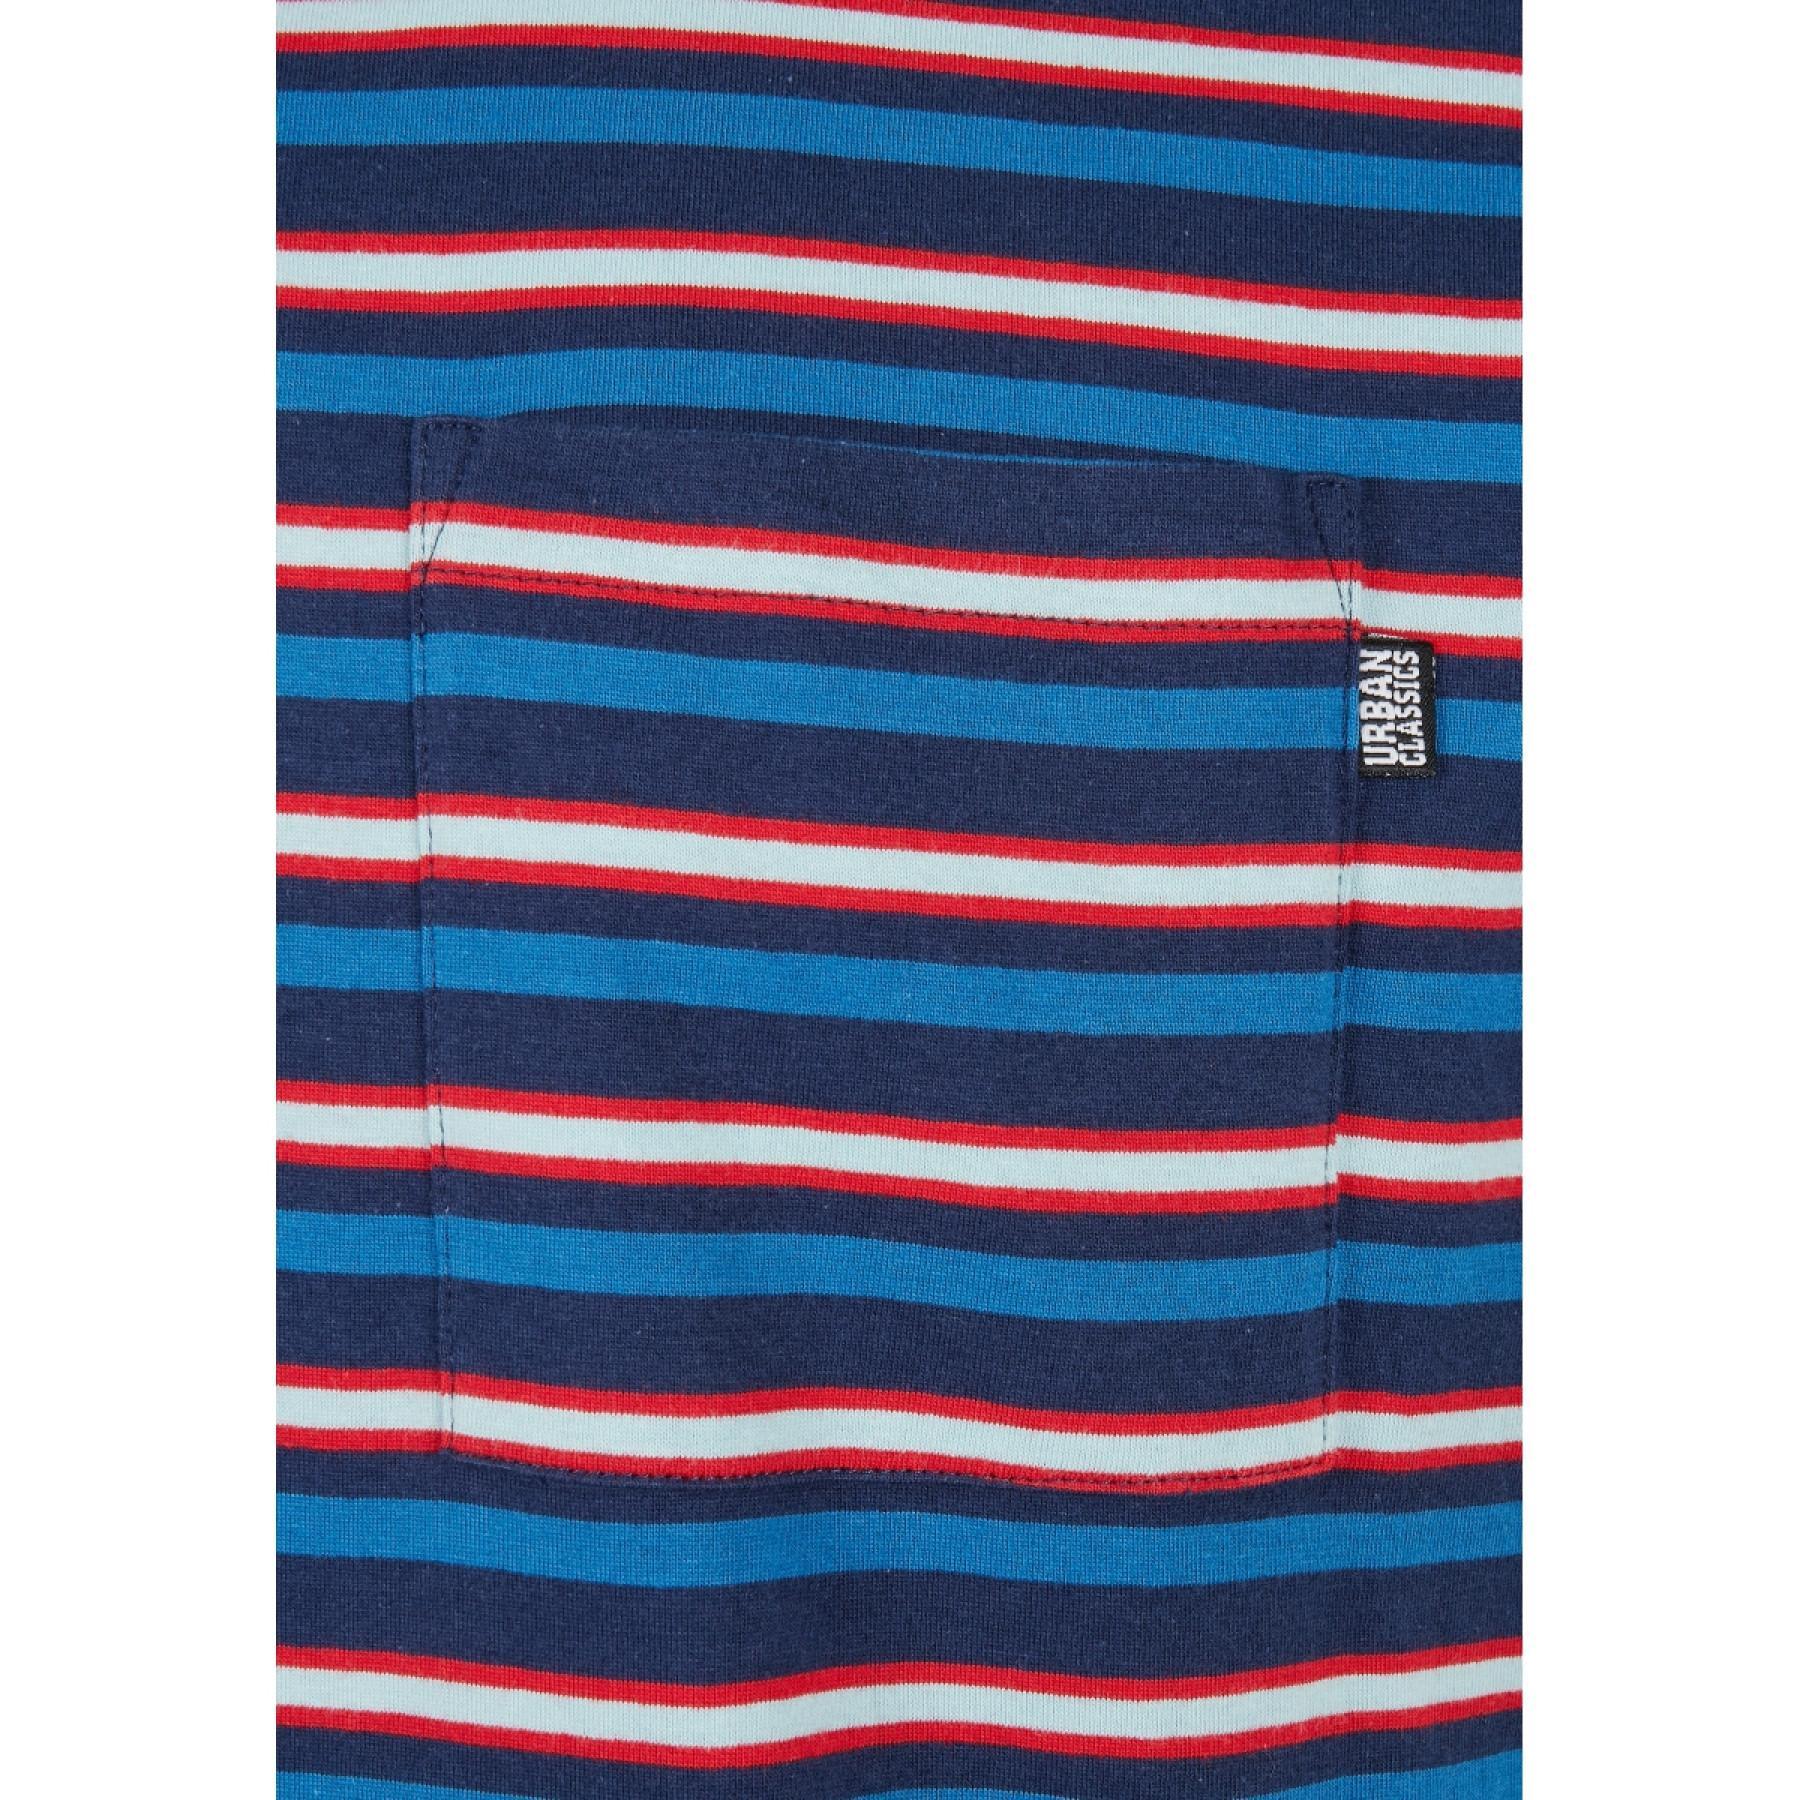 Camiseta Urban Classics fast stripe pocket